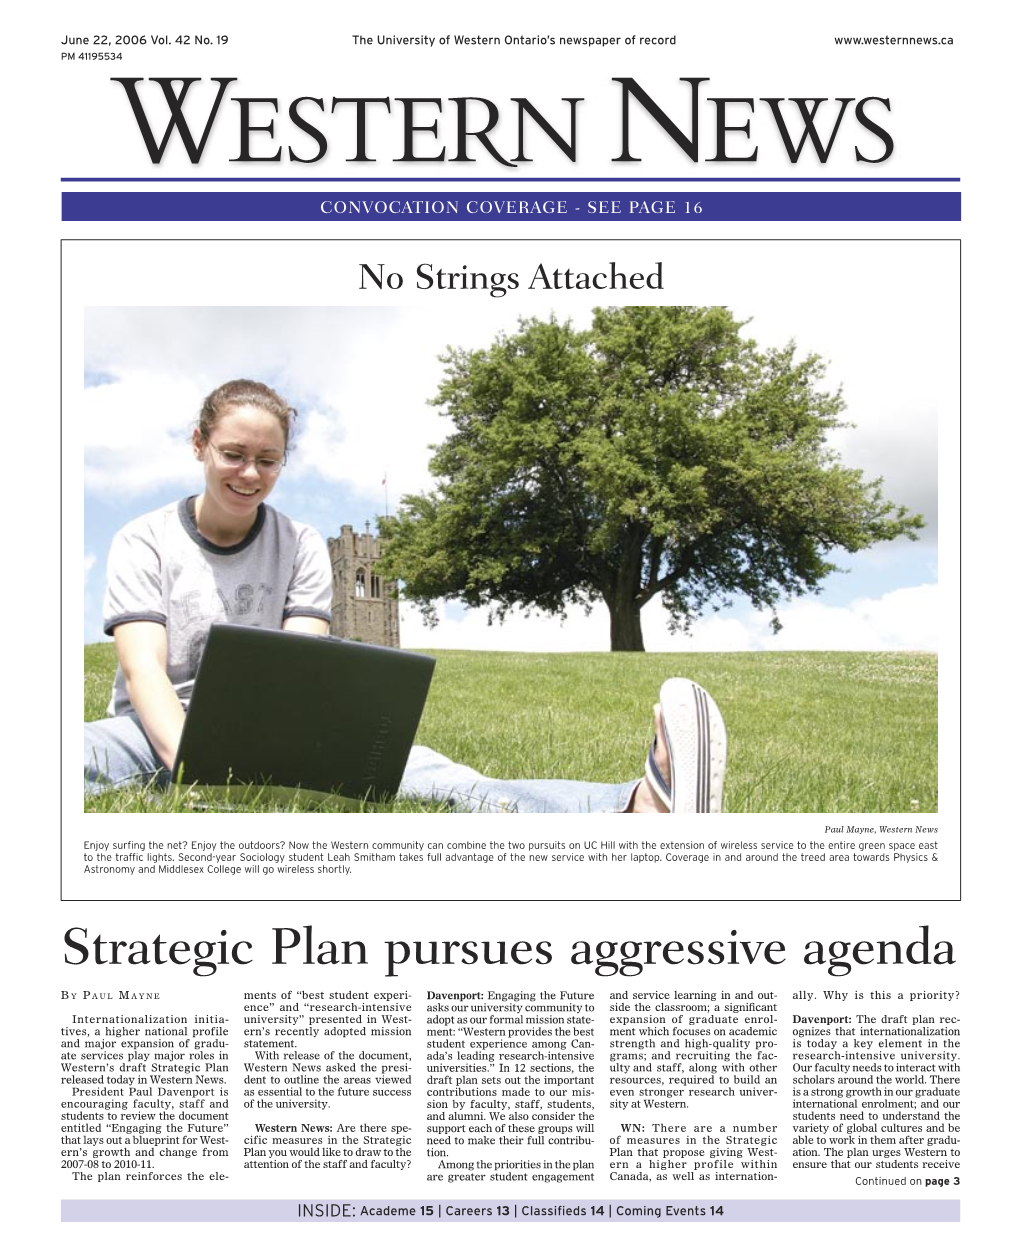 Strategic Plan Pursues Aggressive Agenda